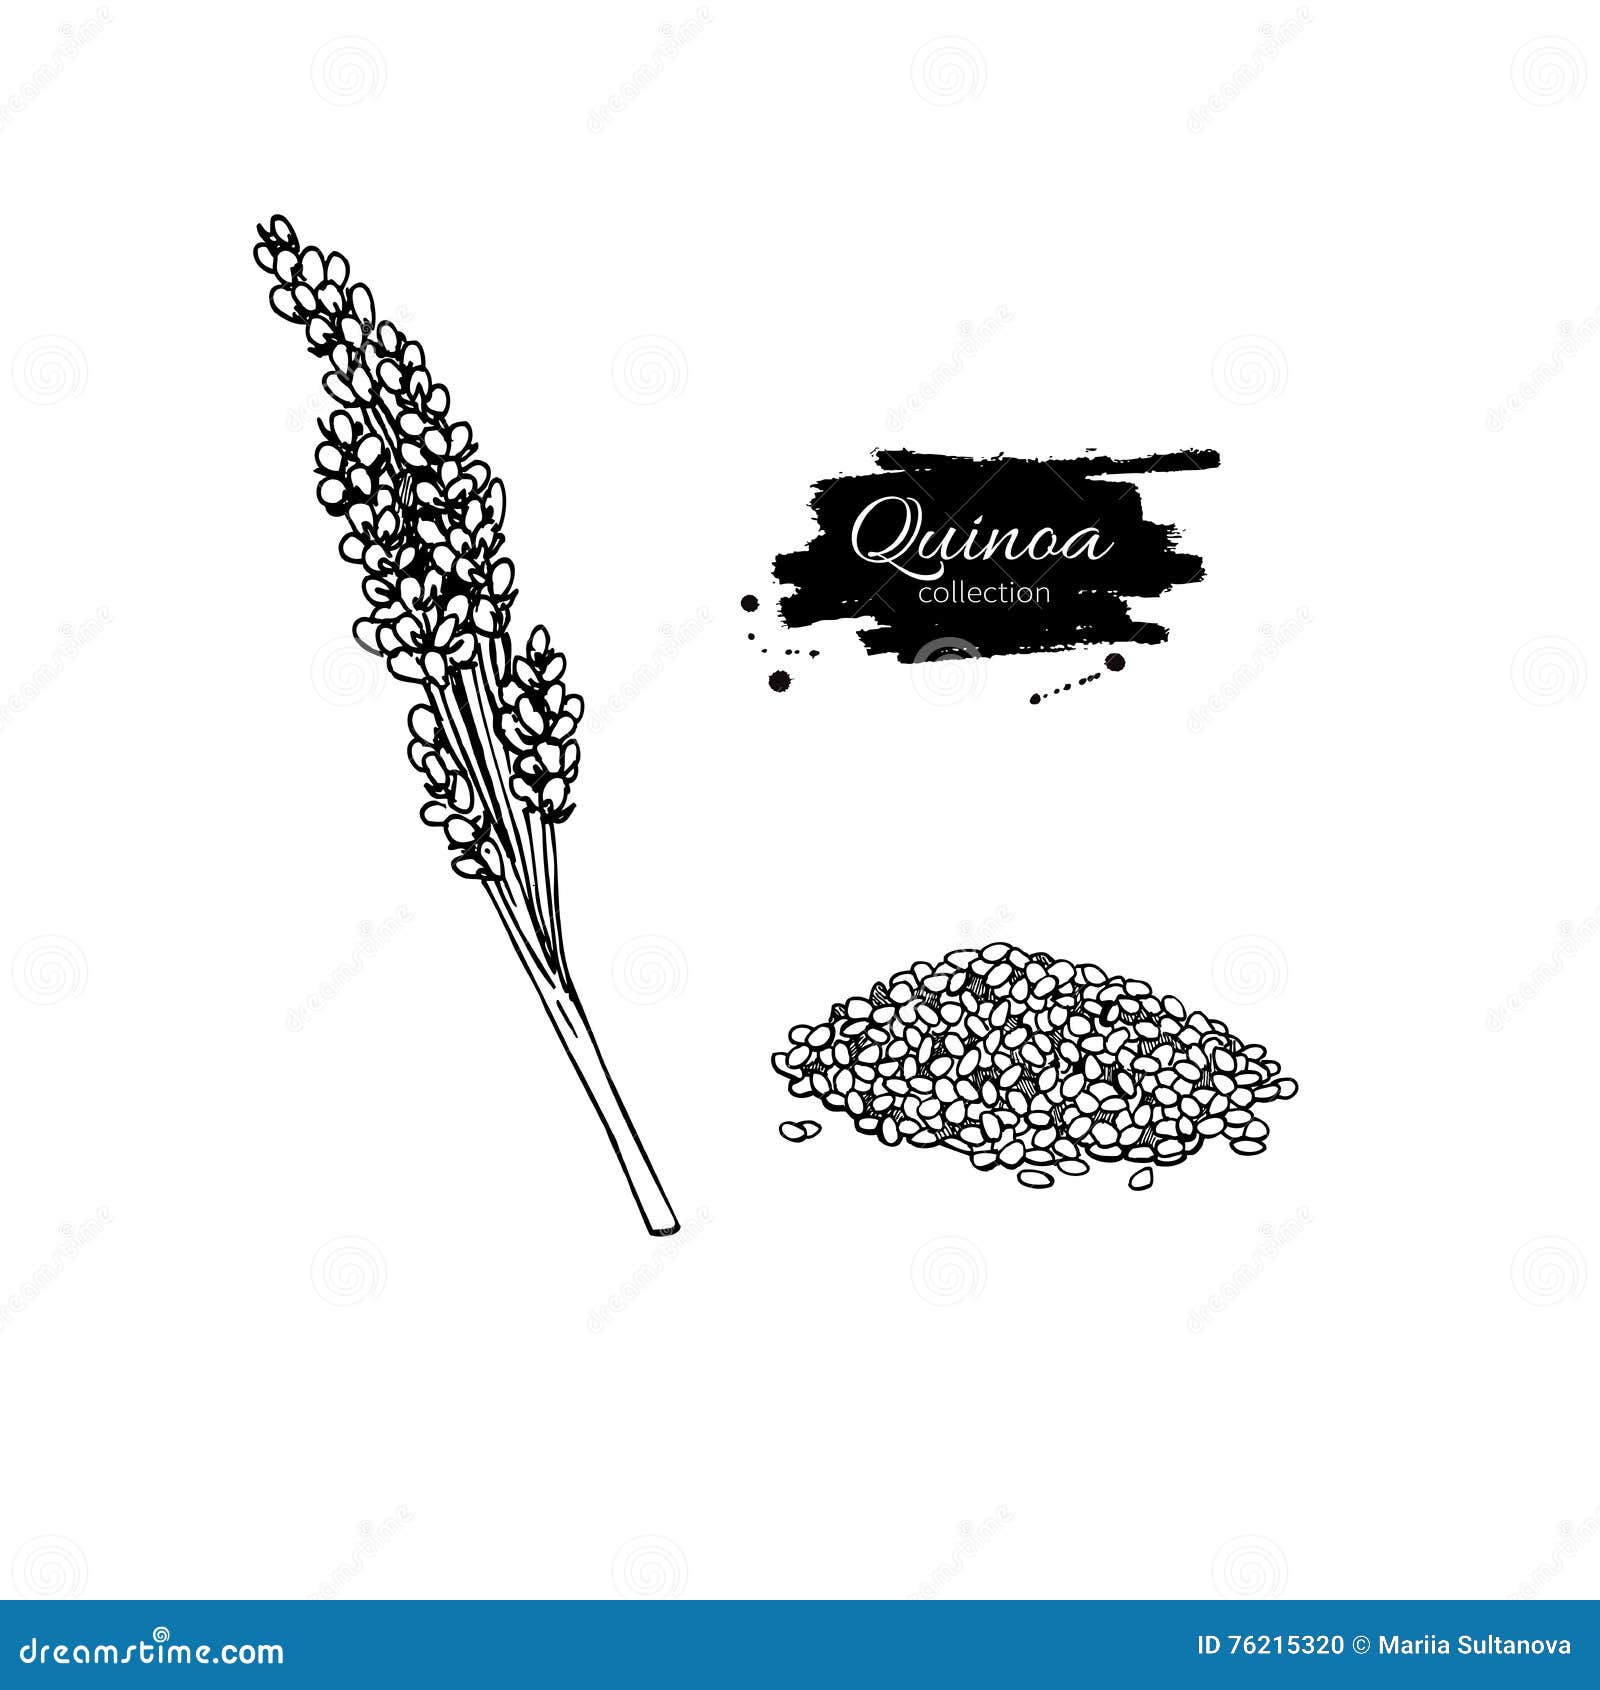 quinoa superfood drawing. hand drawn illustrati